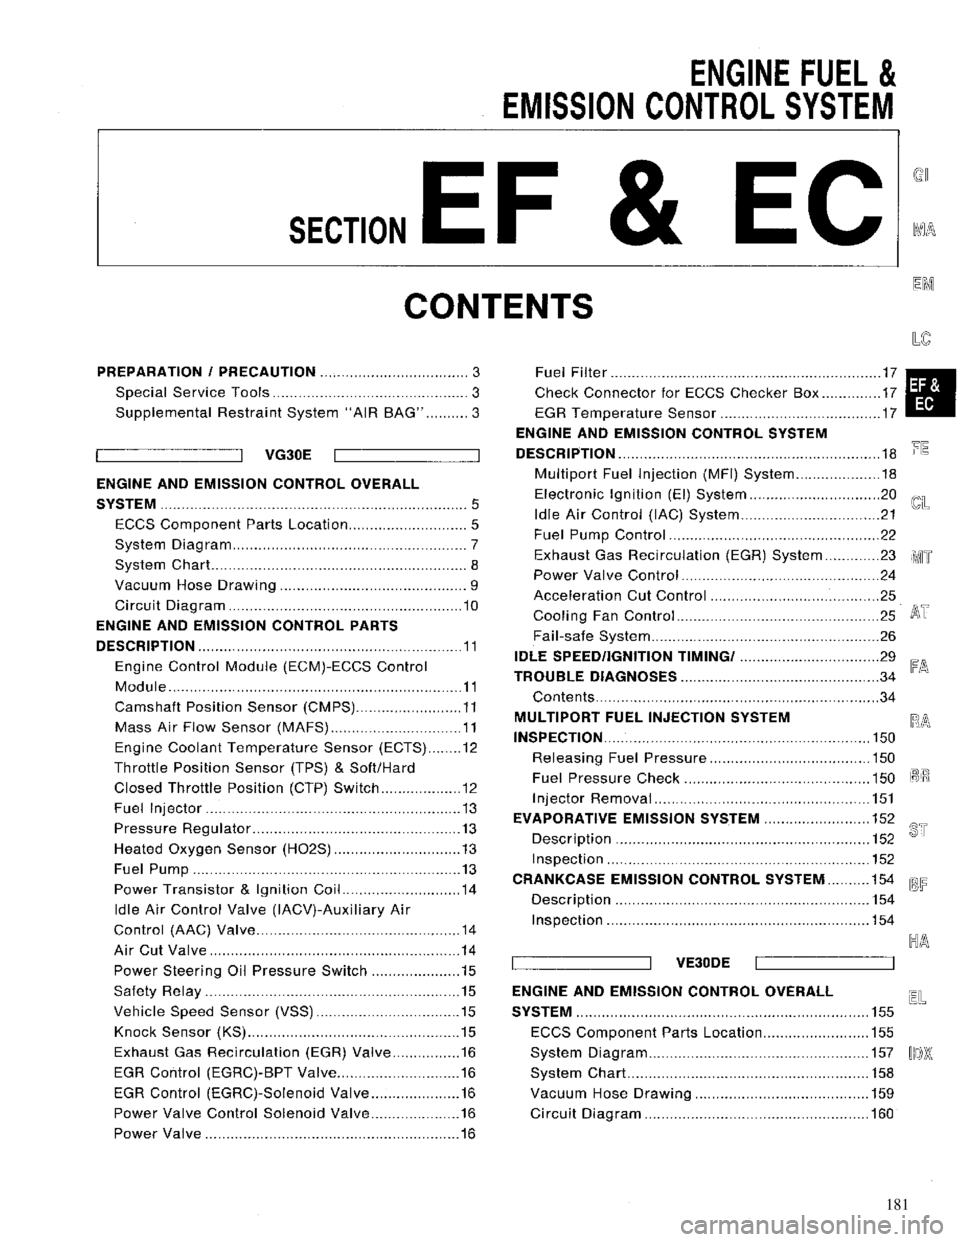 NISSAN MAXIMA 1994 A32 / 4.G Engine Fuel And Emission Control System Workshop Manual 181 